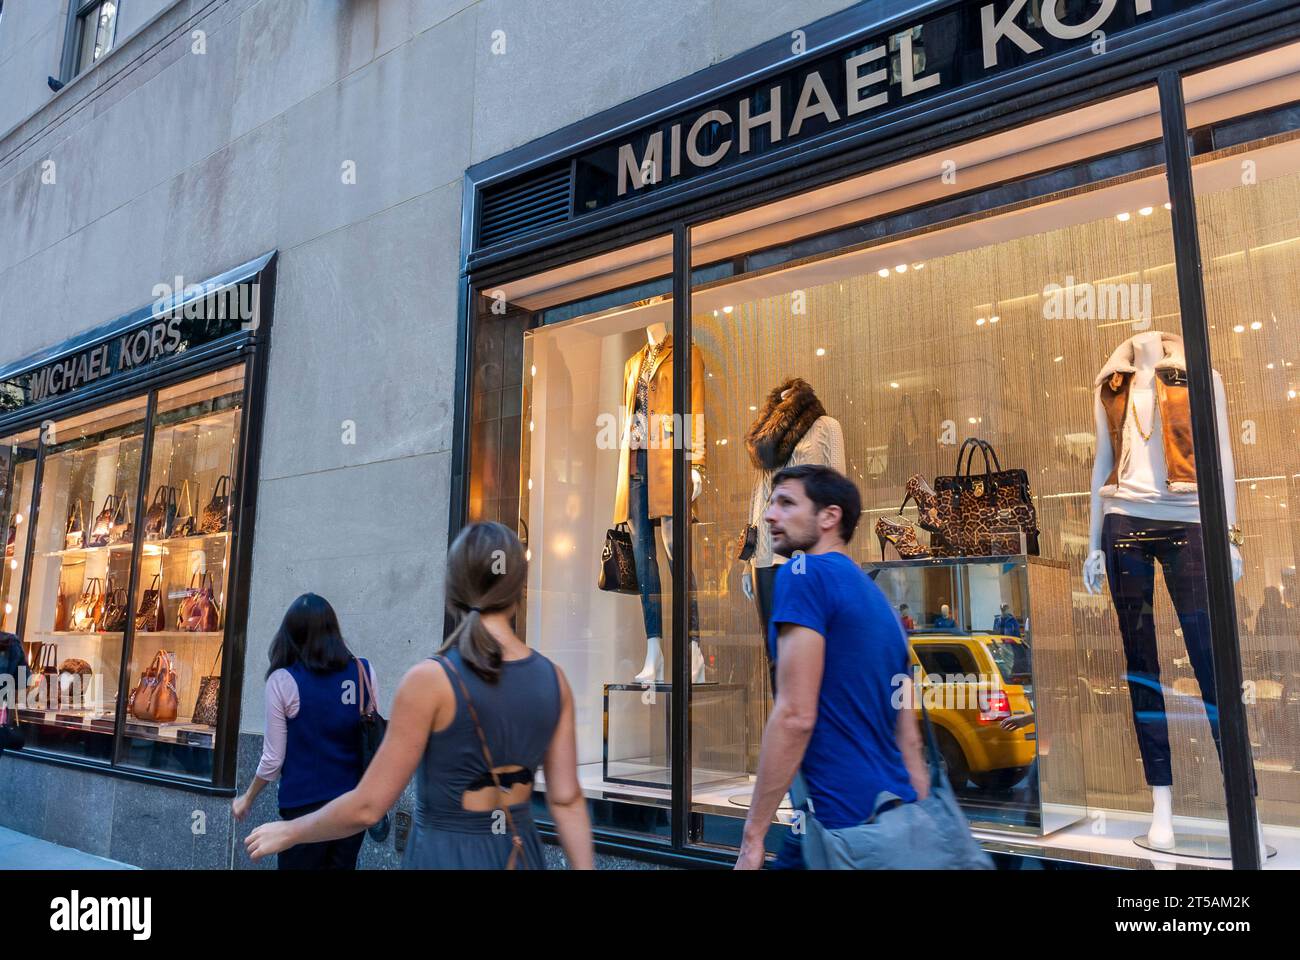 New York City, USA. 20th Feb, 2020. American fashion brand Michael Kors  stall seen in a